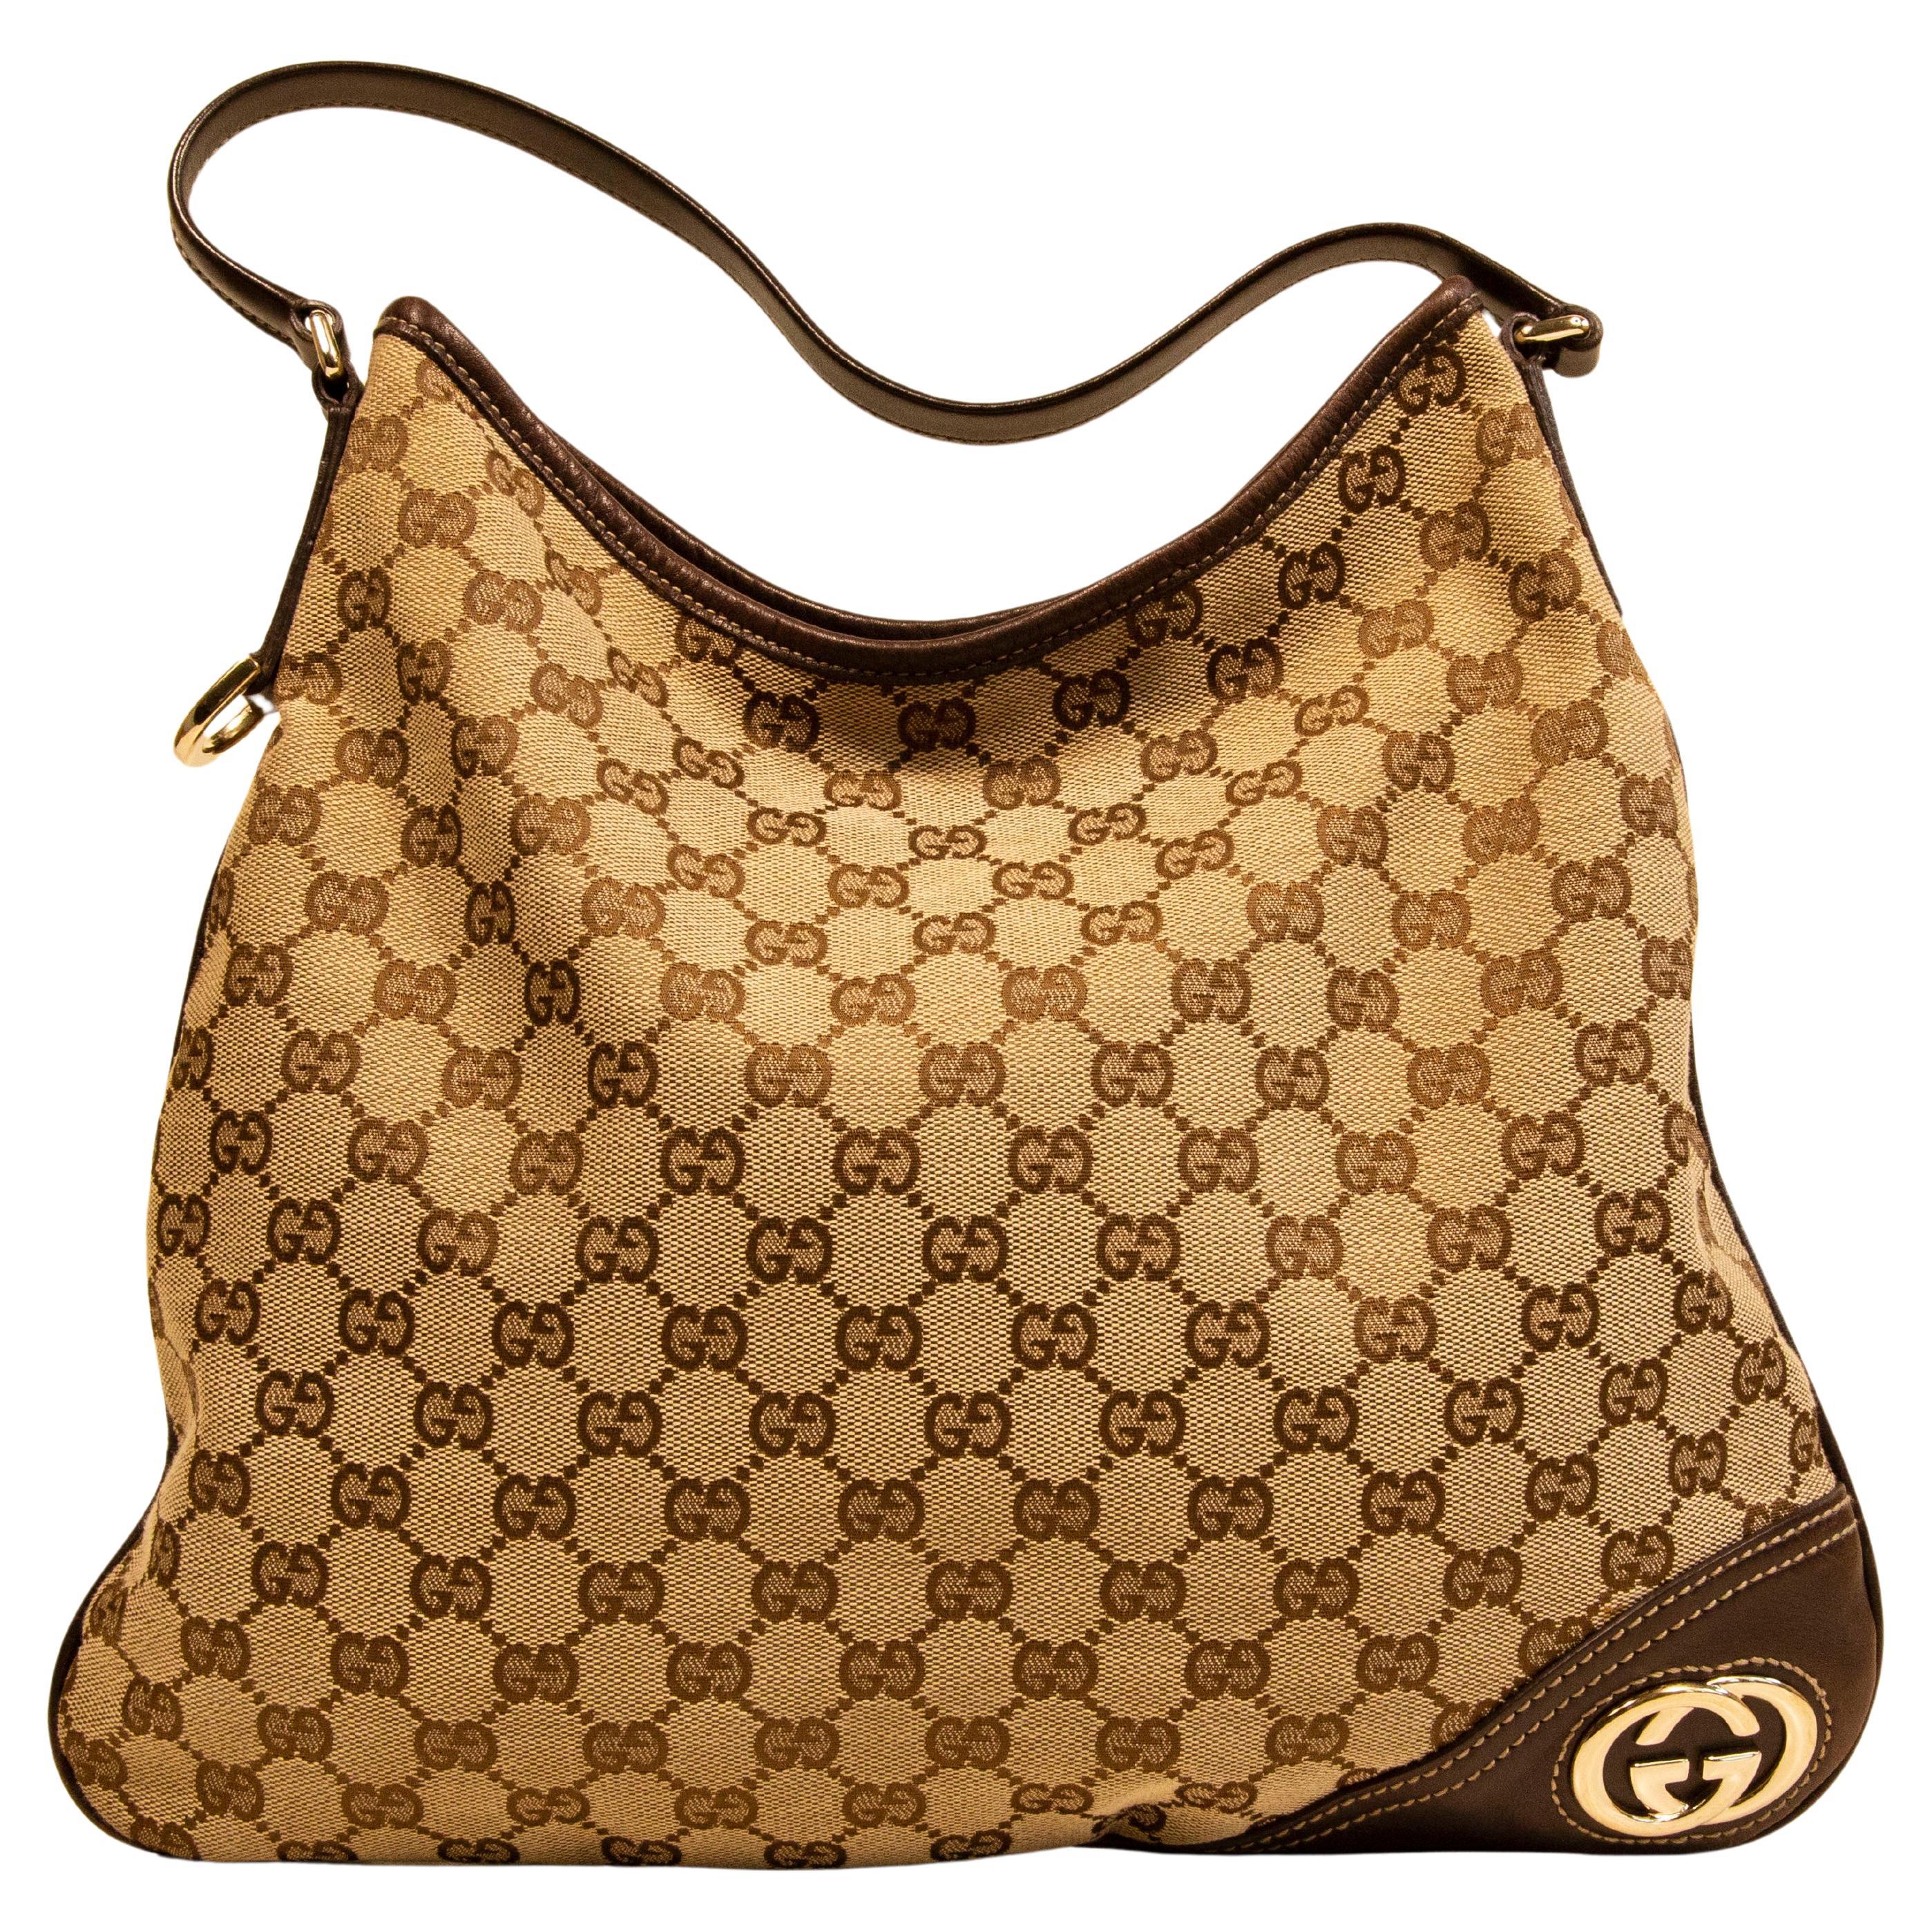 Gucci New Britt Medium Hobo Shoulder Bag in GG Guccissima Canvas For Sale